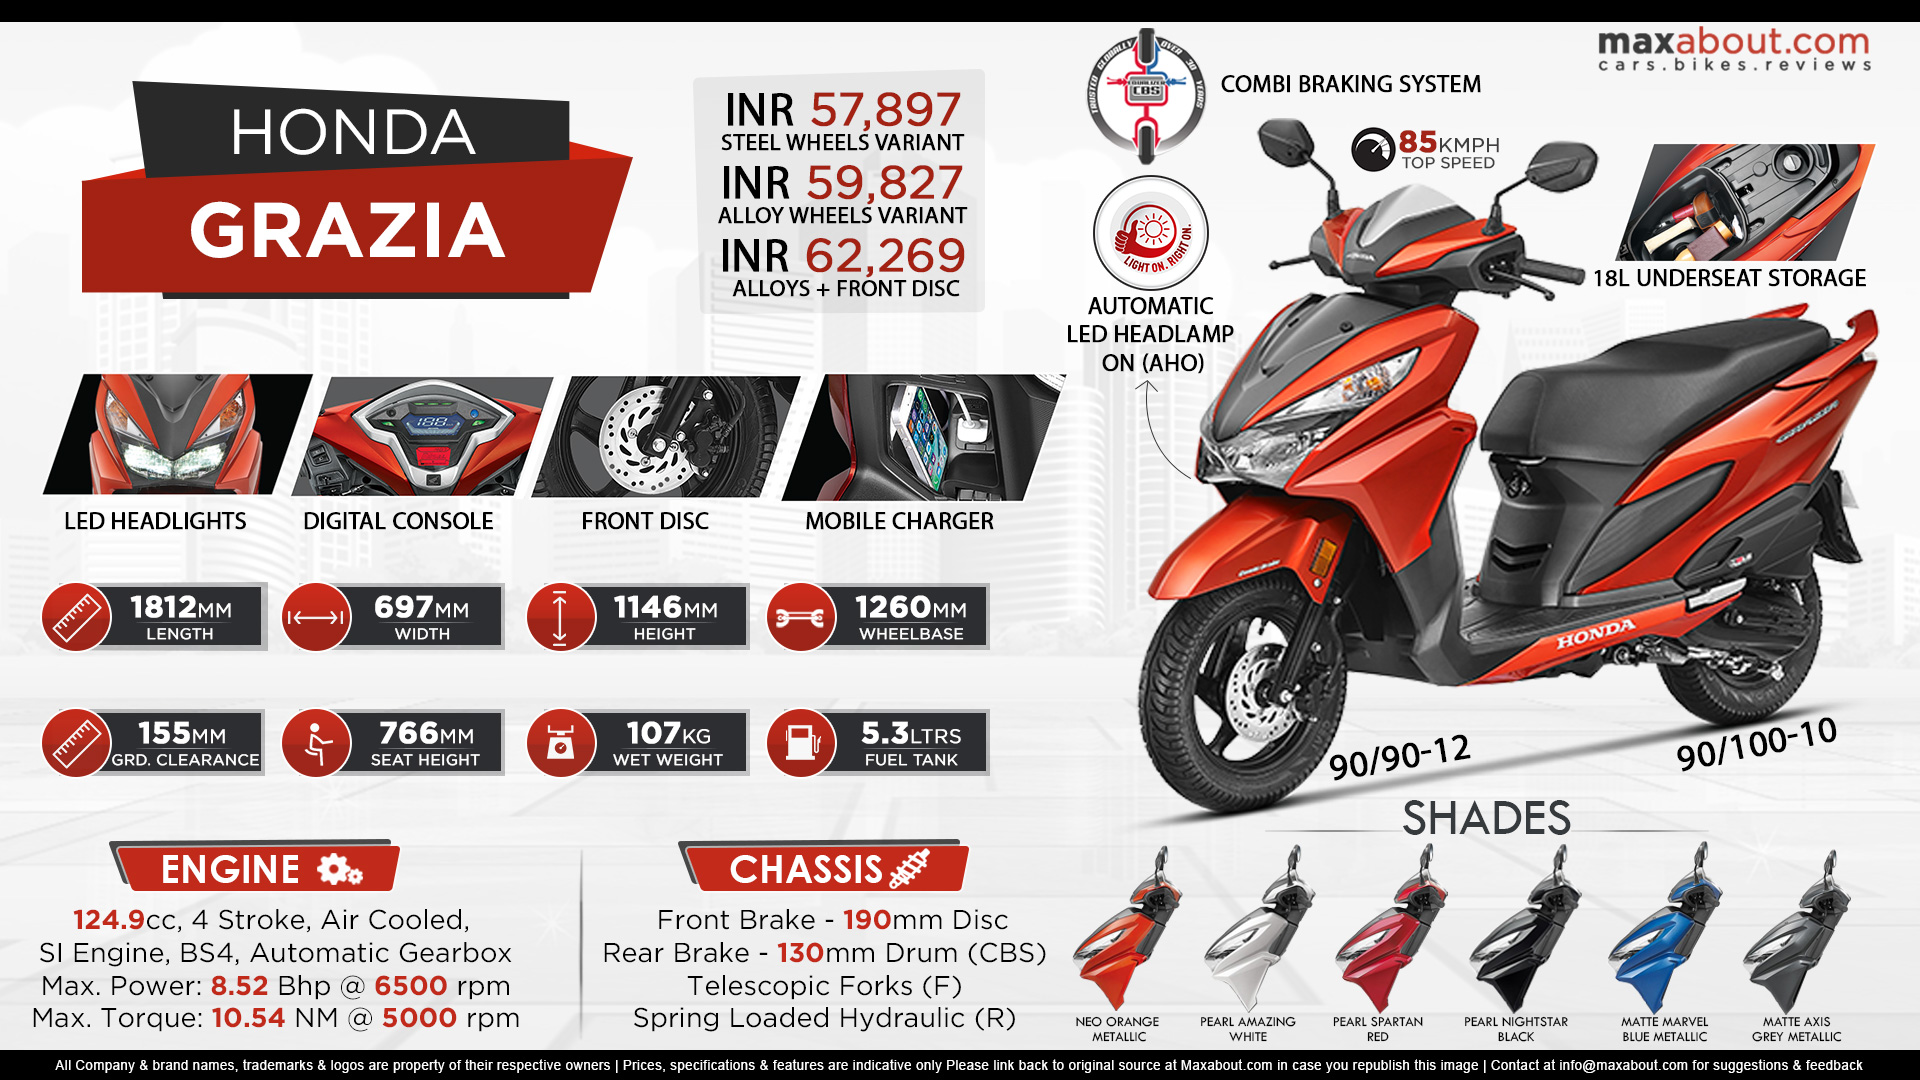 Quick Facts About Honda Grazia